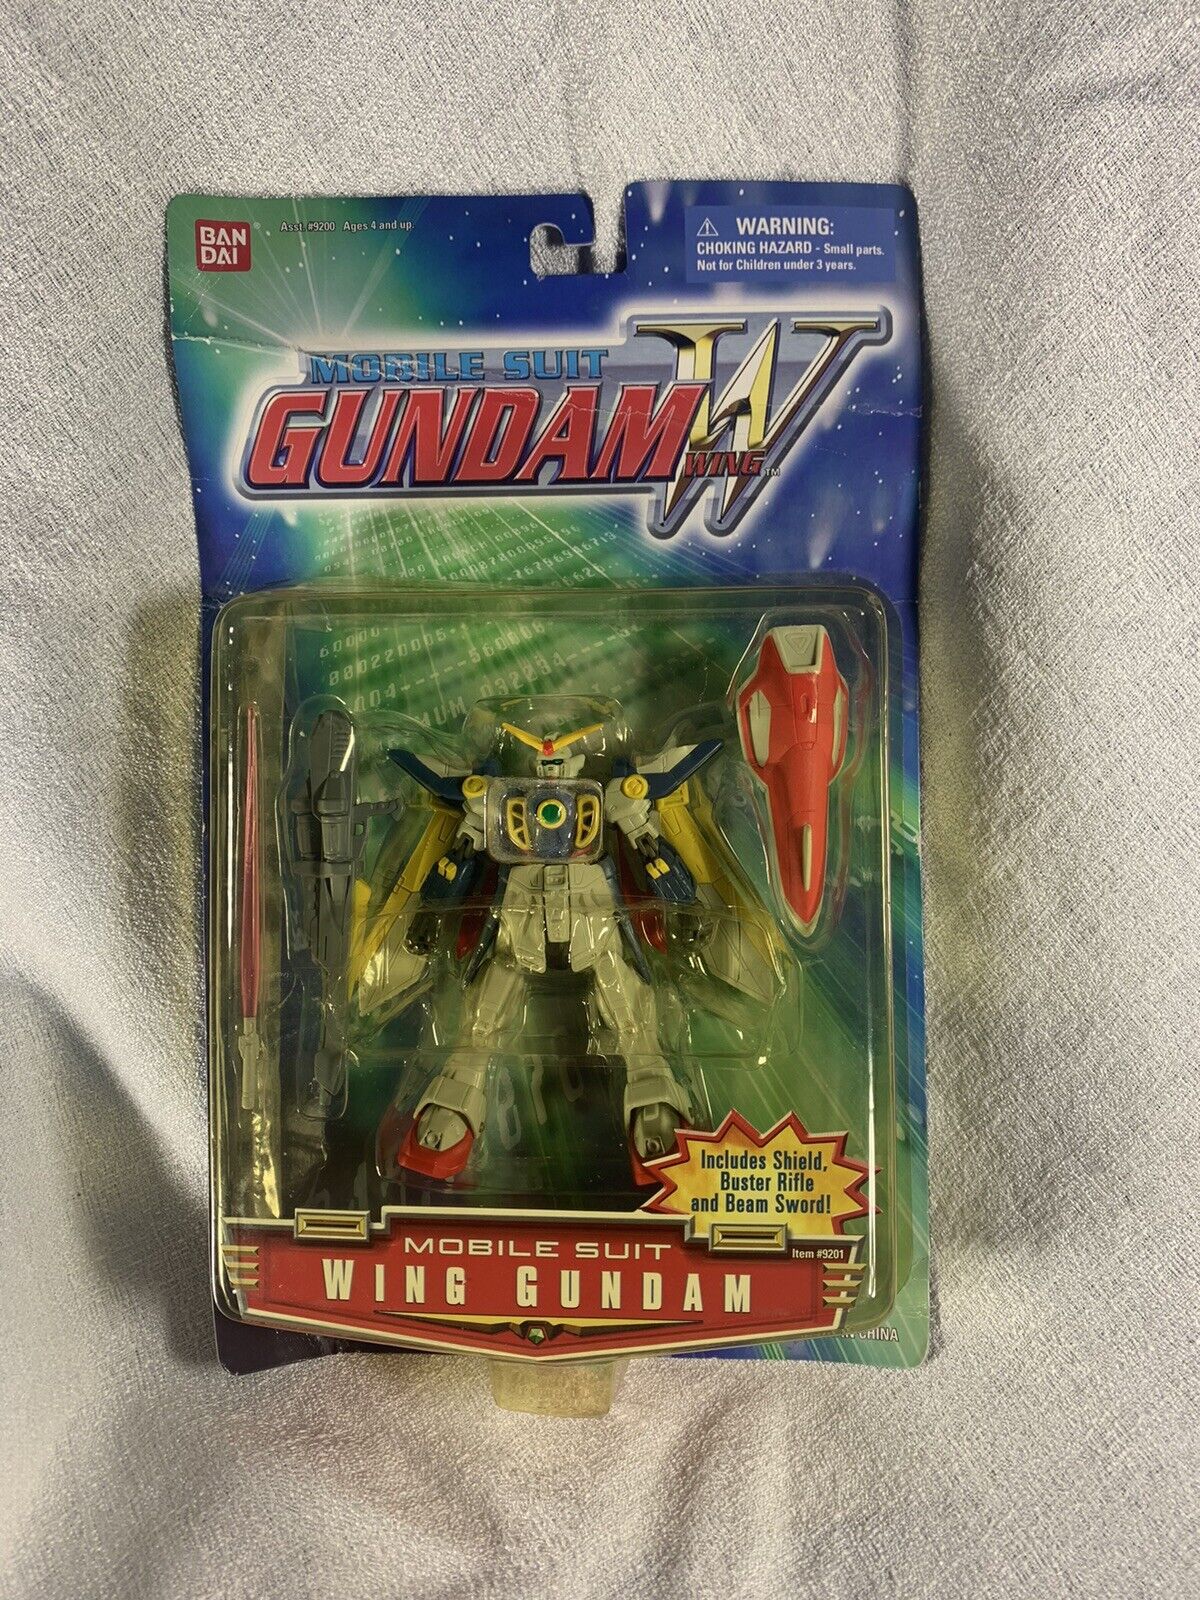 Wing Gundam Figurine